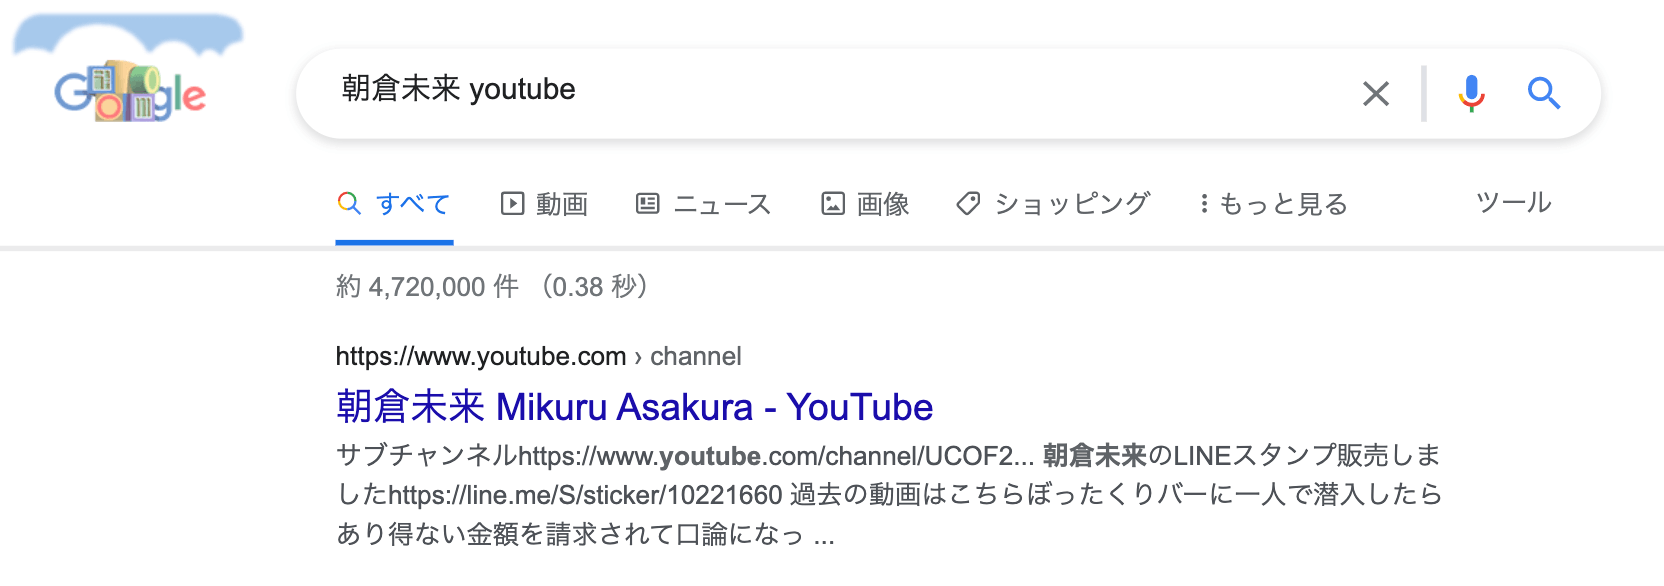 mikuru asakura youtube-google search